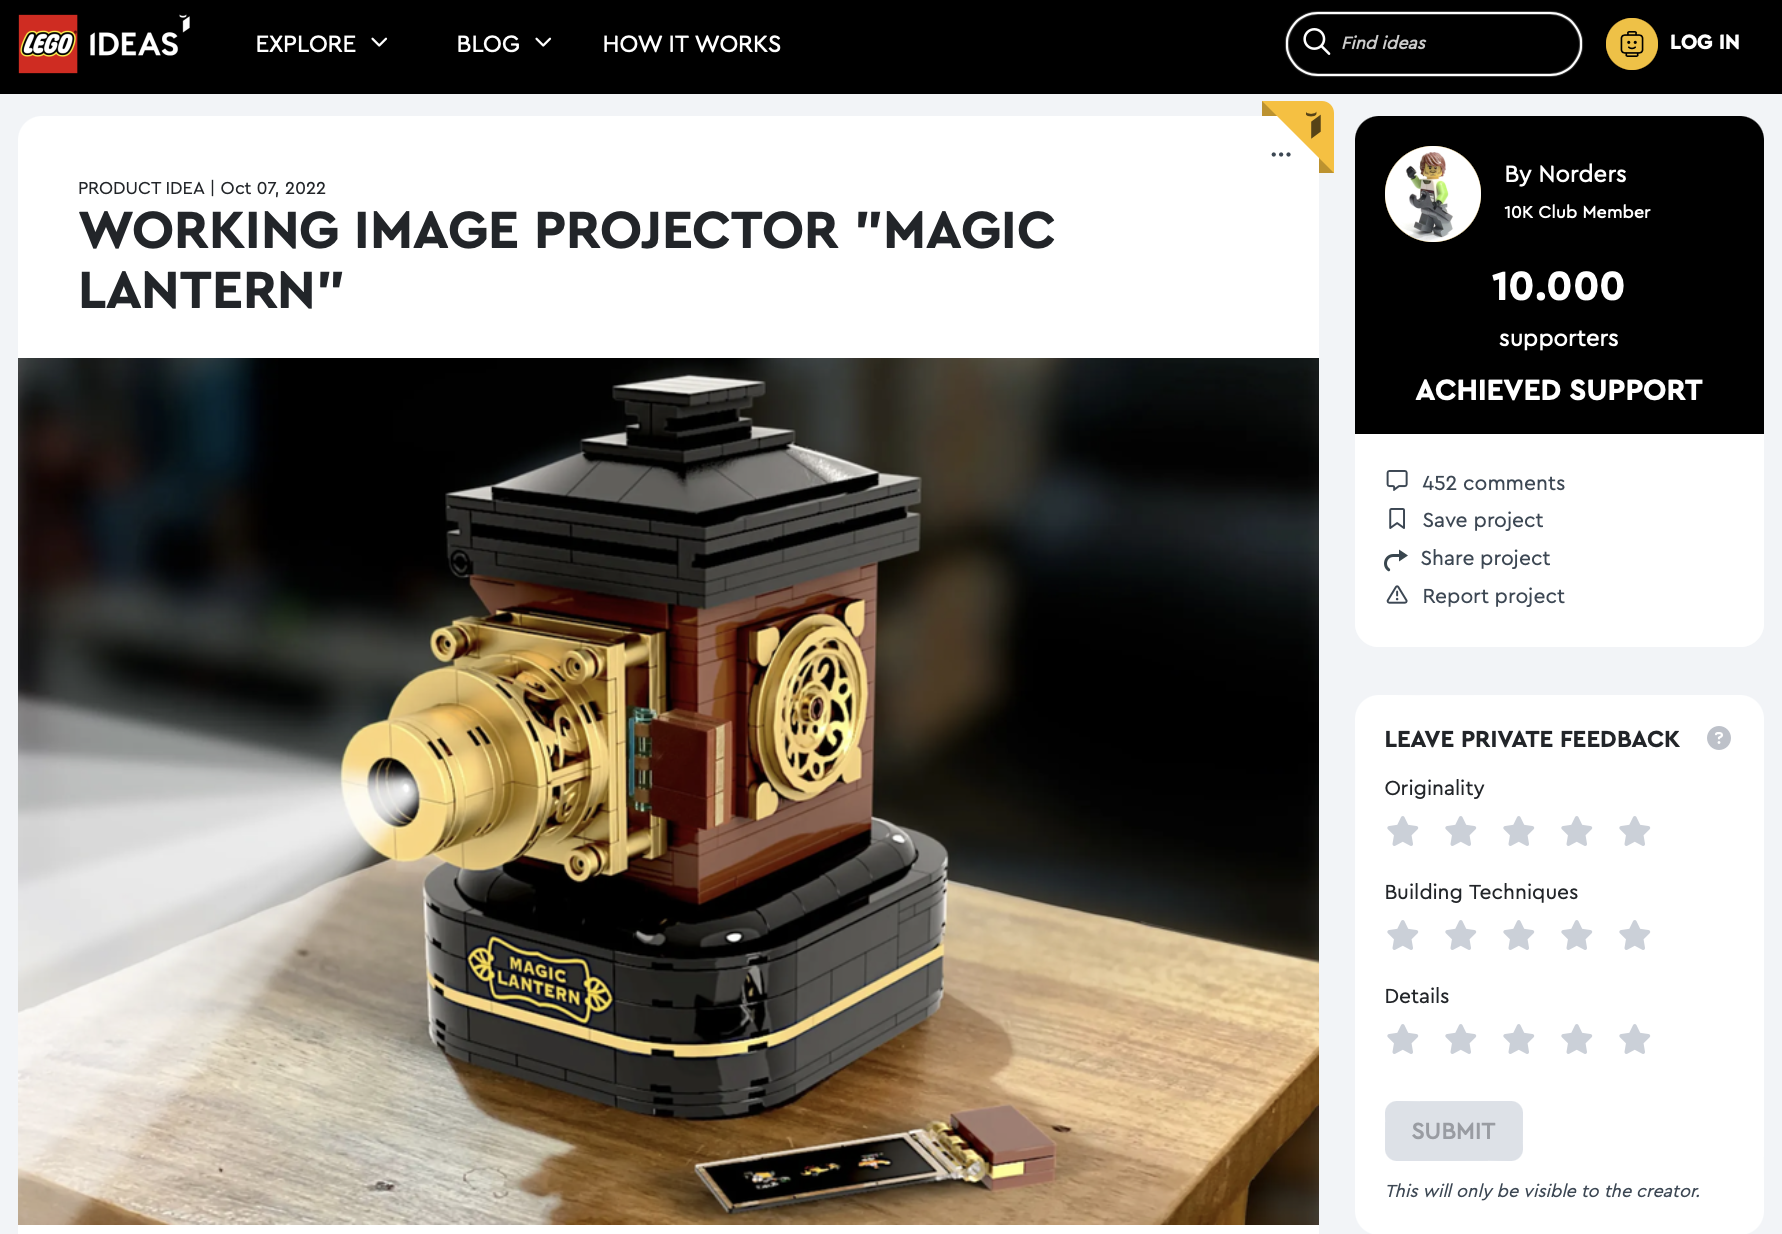 Working Image Projector “Magic Lantern” raggiunge i 10k su LEGO Ideas